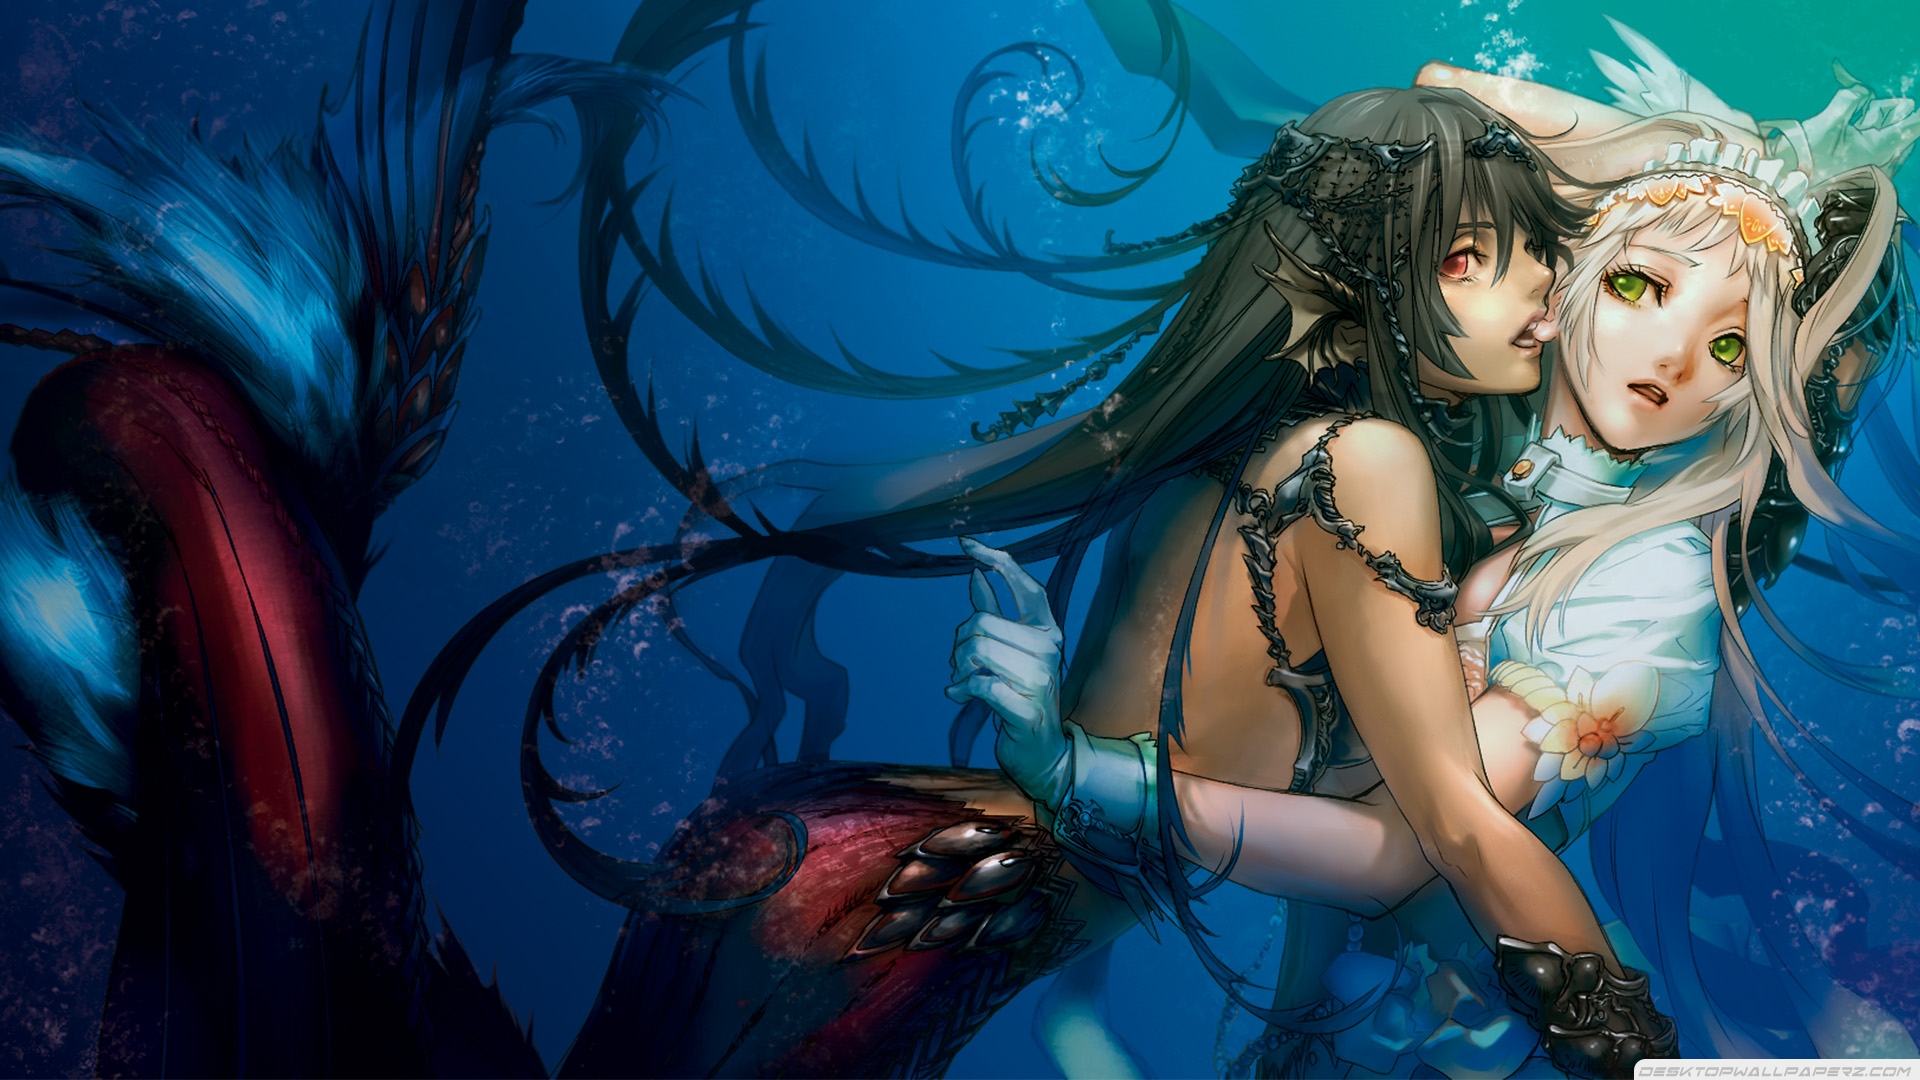 Black Long Hair Mermaids Anime Girls Underwater Fantasy Art